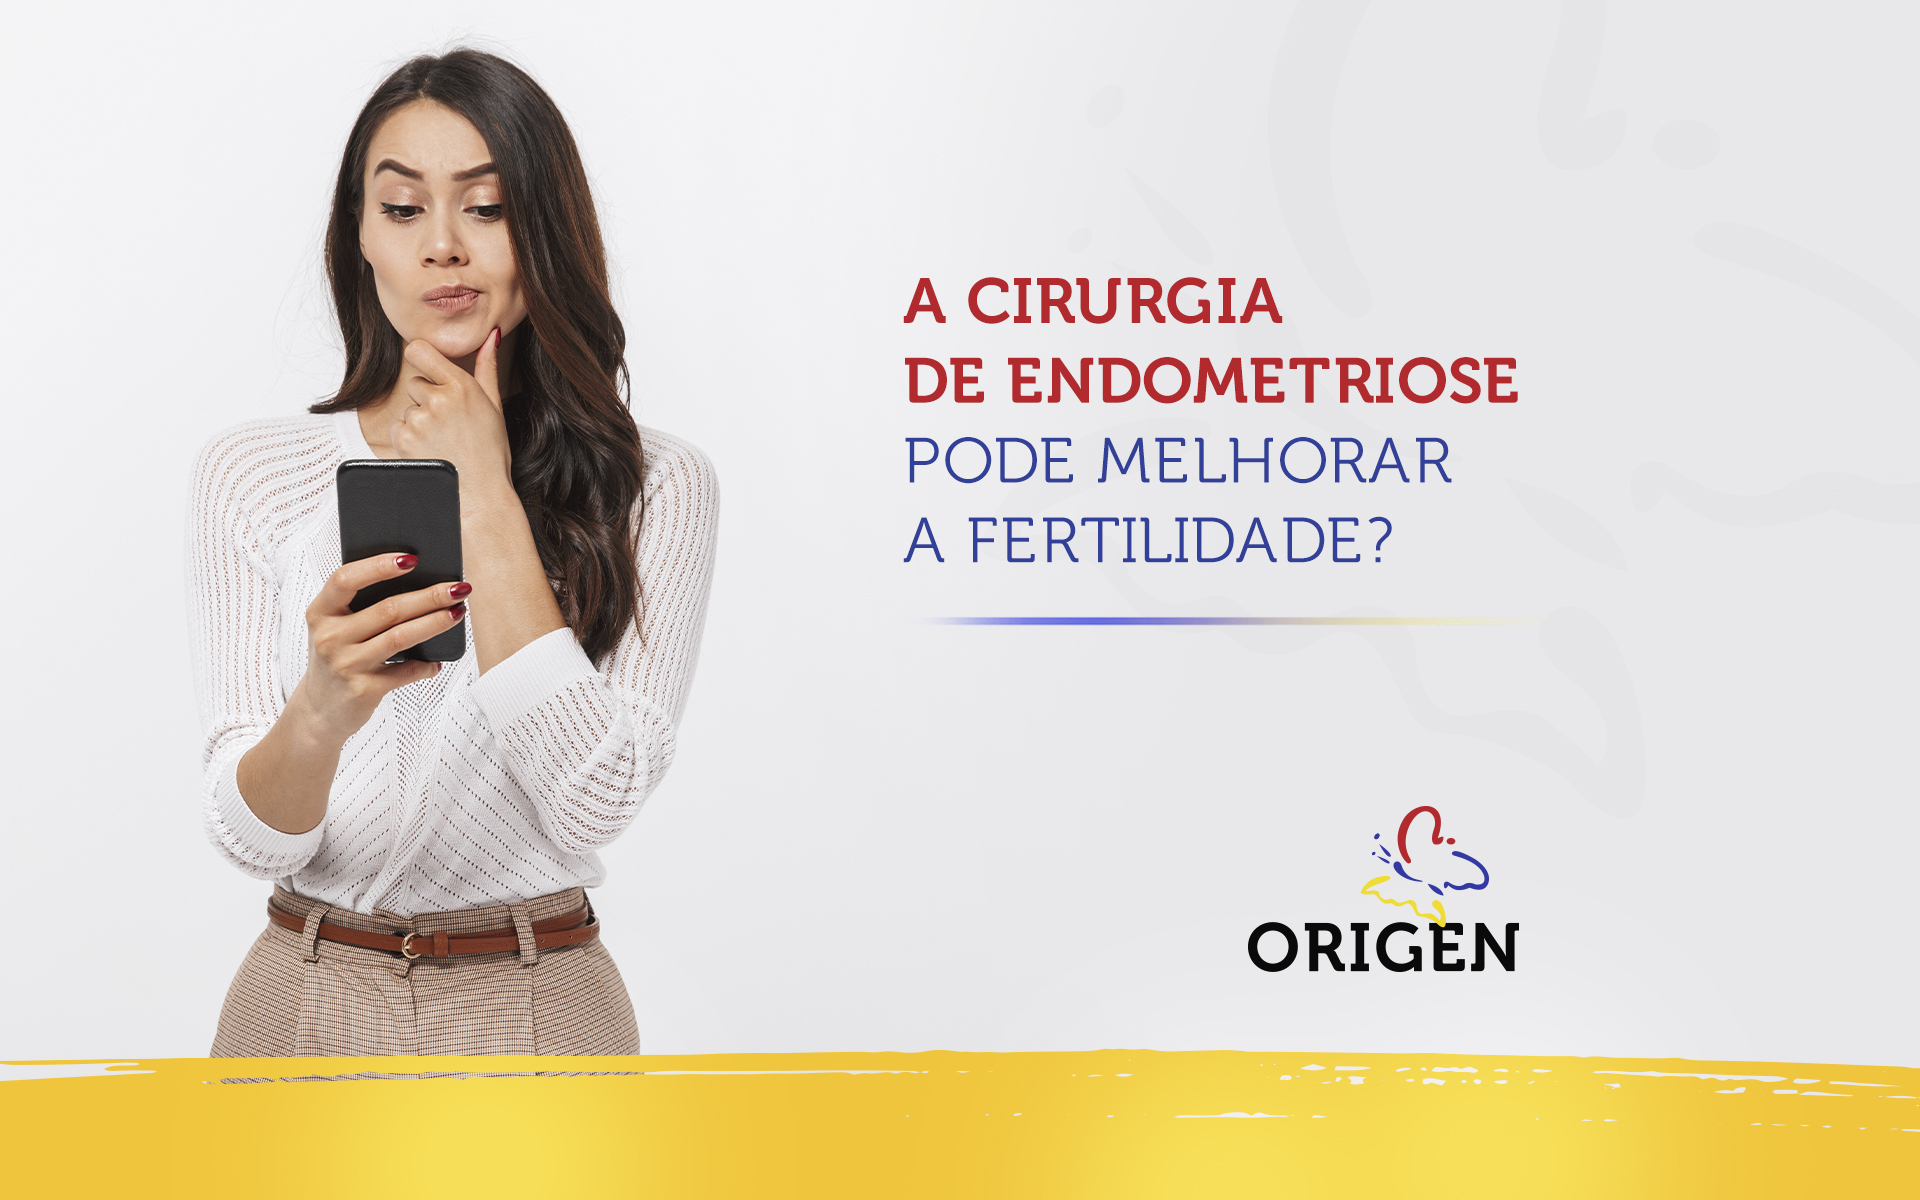 A cirurgia de endometriose pode melhorar a fertilidade?